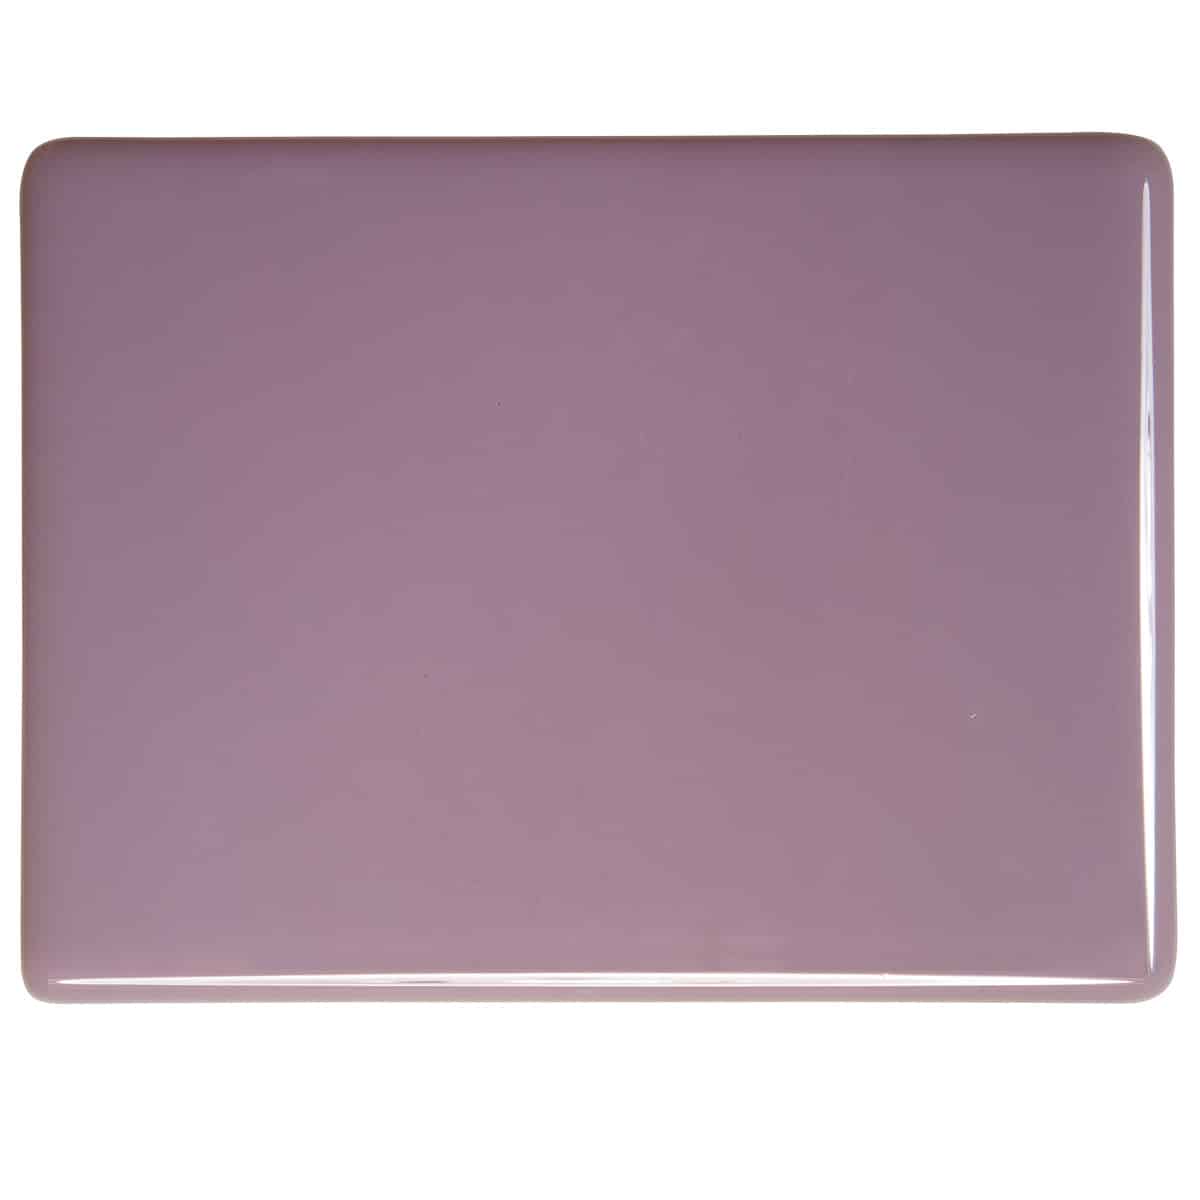 Dusty Lilac Opal sheet glass swatch